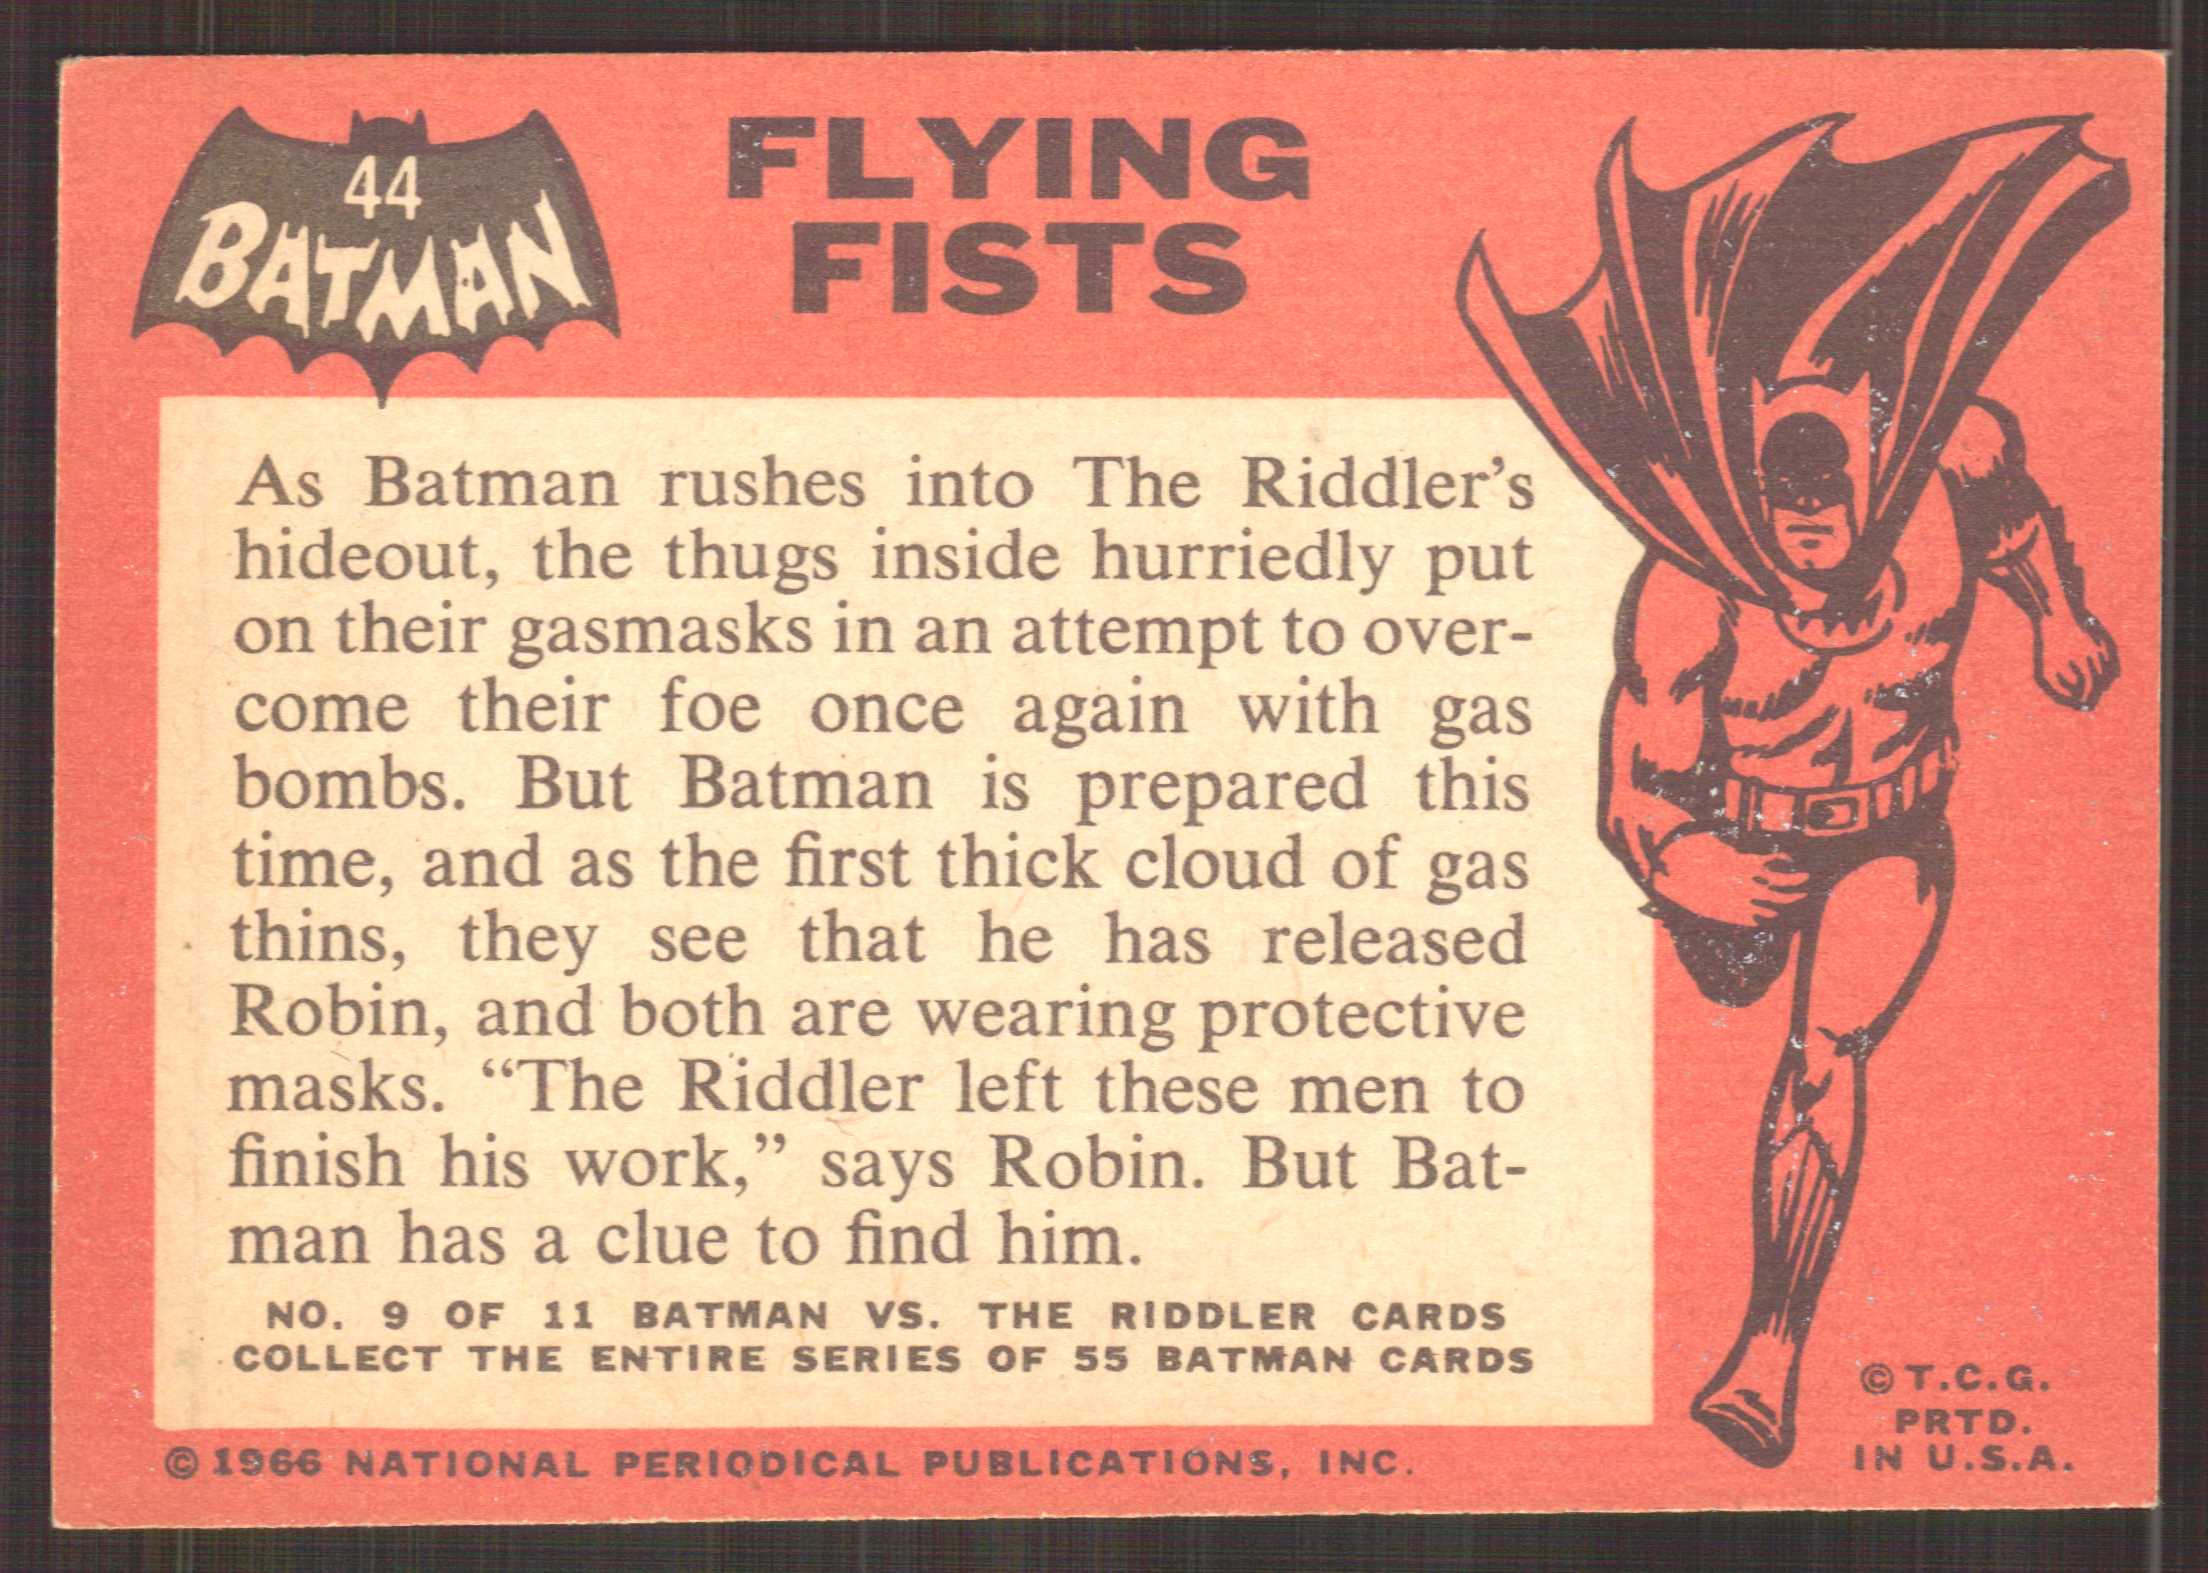 1966 Topps Batman Black Bat #44 Flying Fists back image